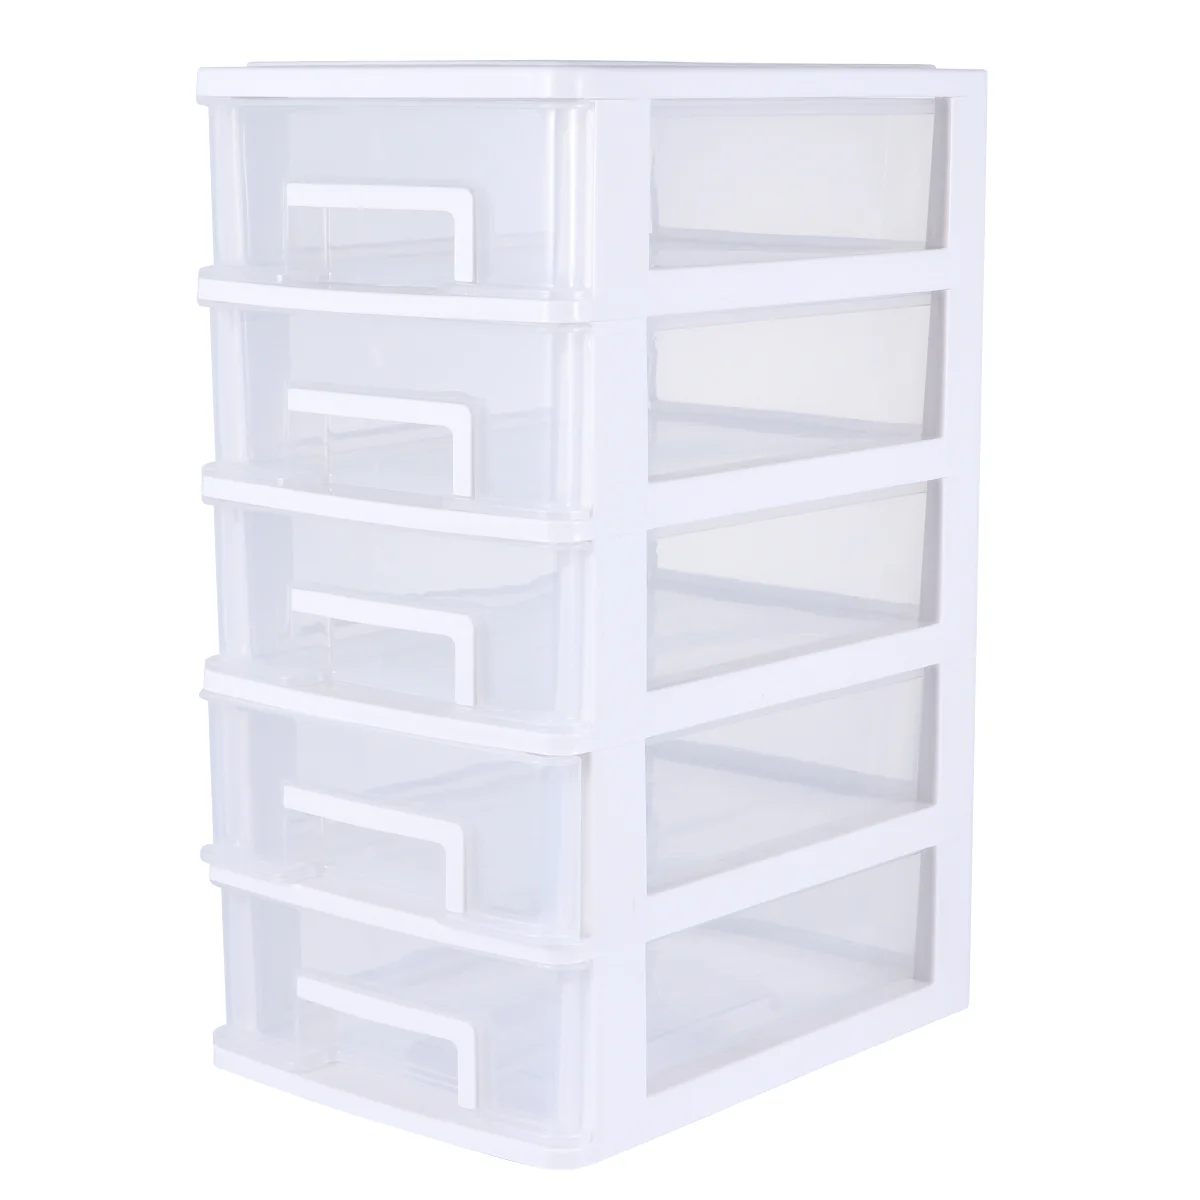 

Storage Drawer Organizer Drawers Box Cabinet Type Desktop Closet Bins Sundries Holder Stacking Desk Layer Shelves Stackable Unit